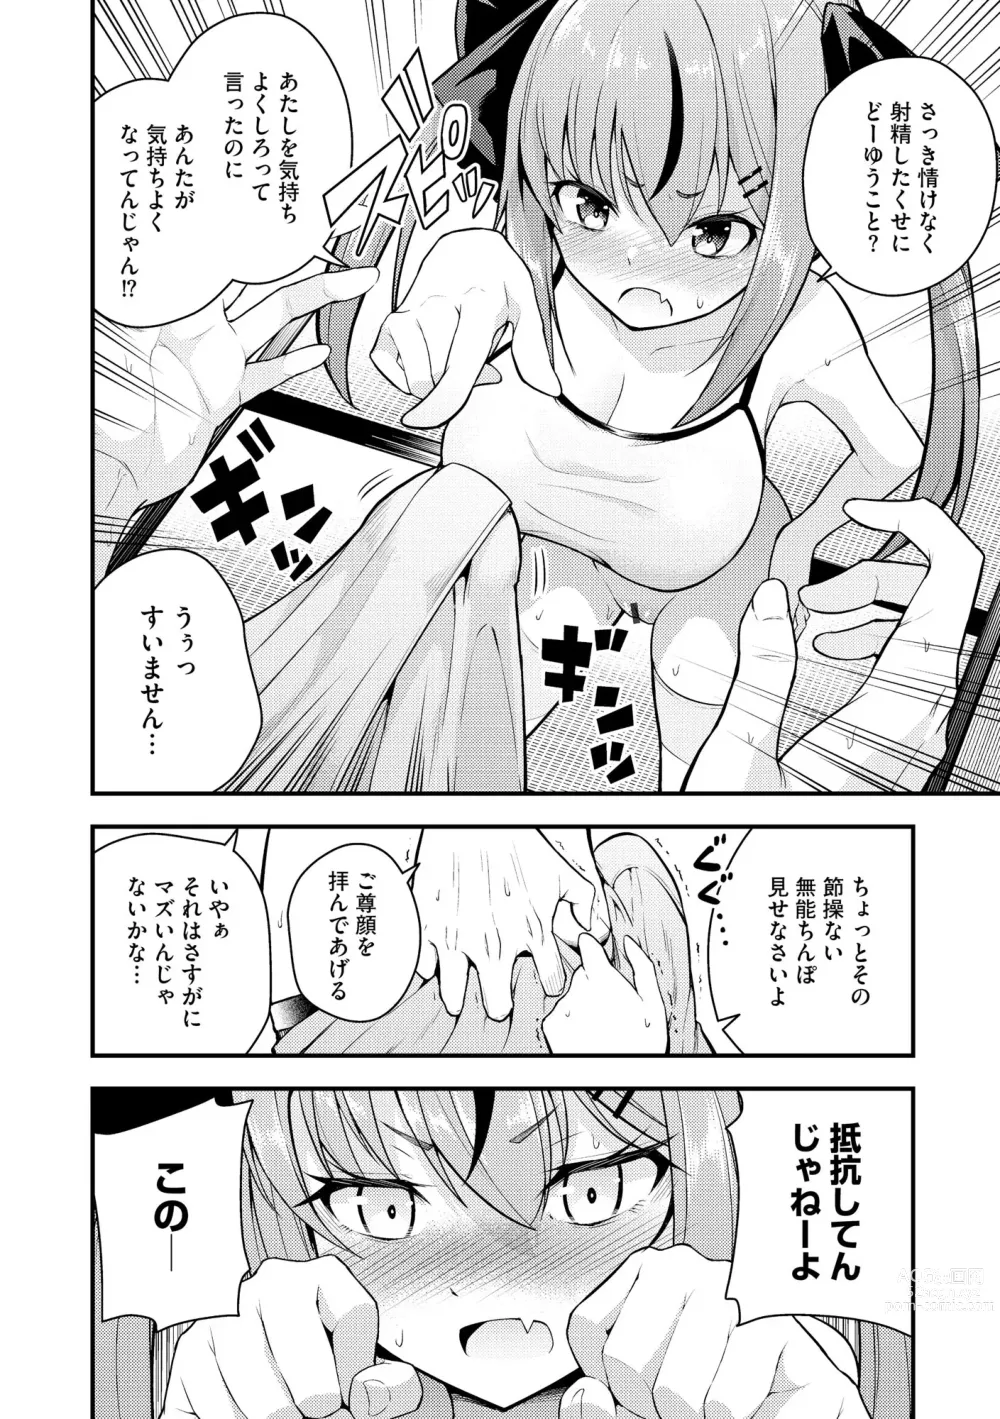 Page 22 of manga Cyberia Plus Vol. 16